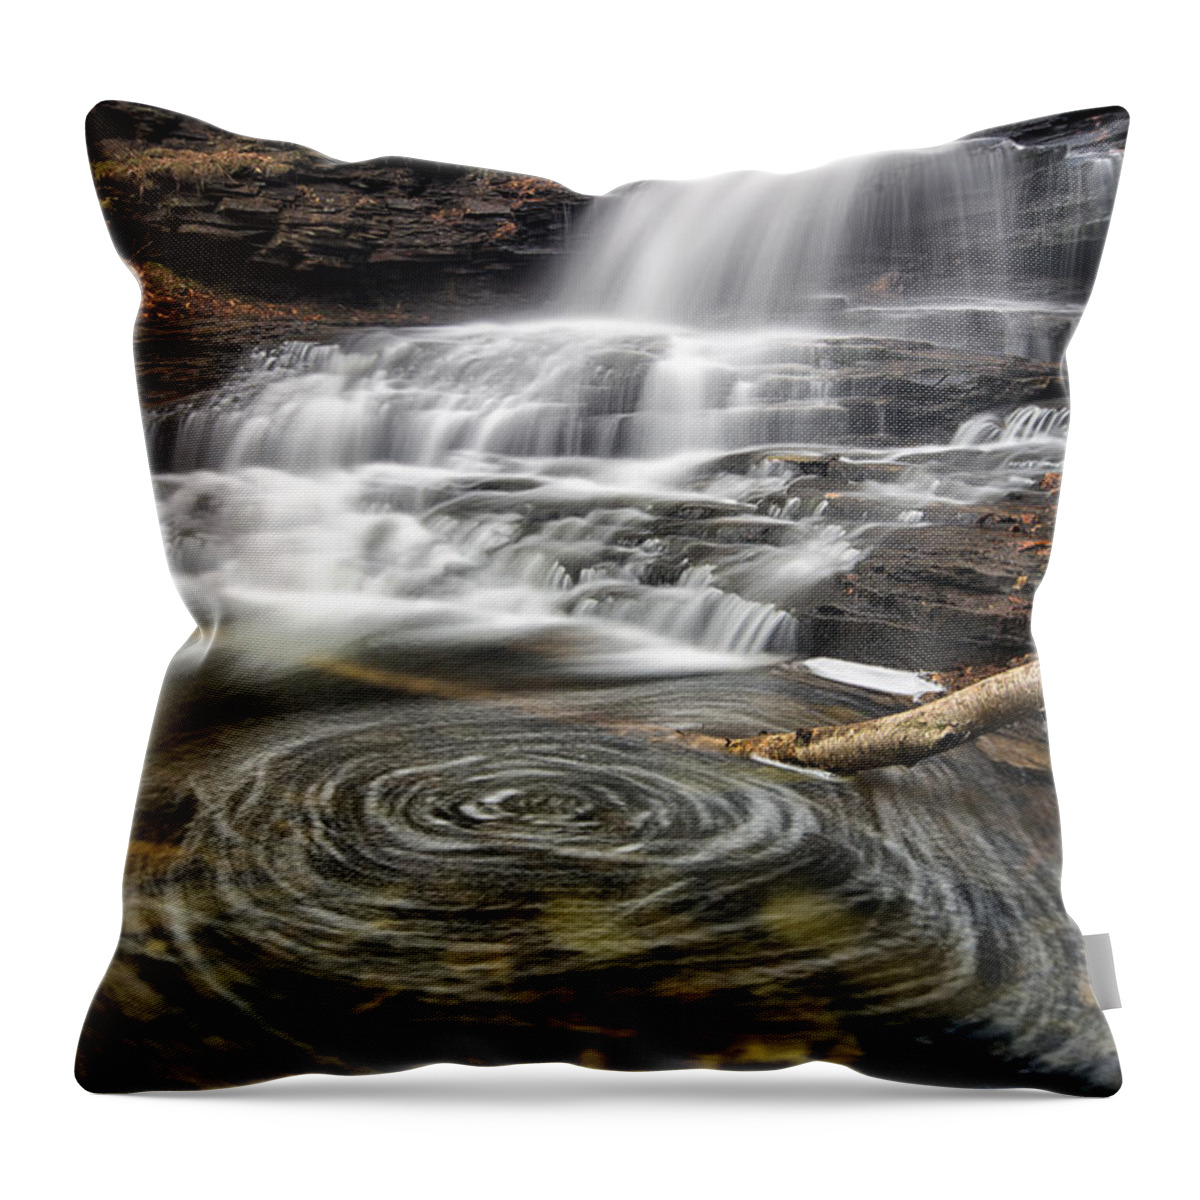 Waterfall Throw Pillow featuring the photograph Stirring The Pot by Robert Fawcett